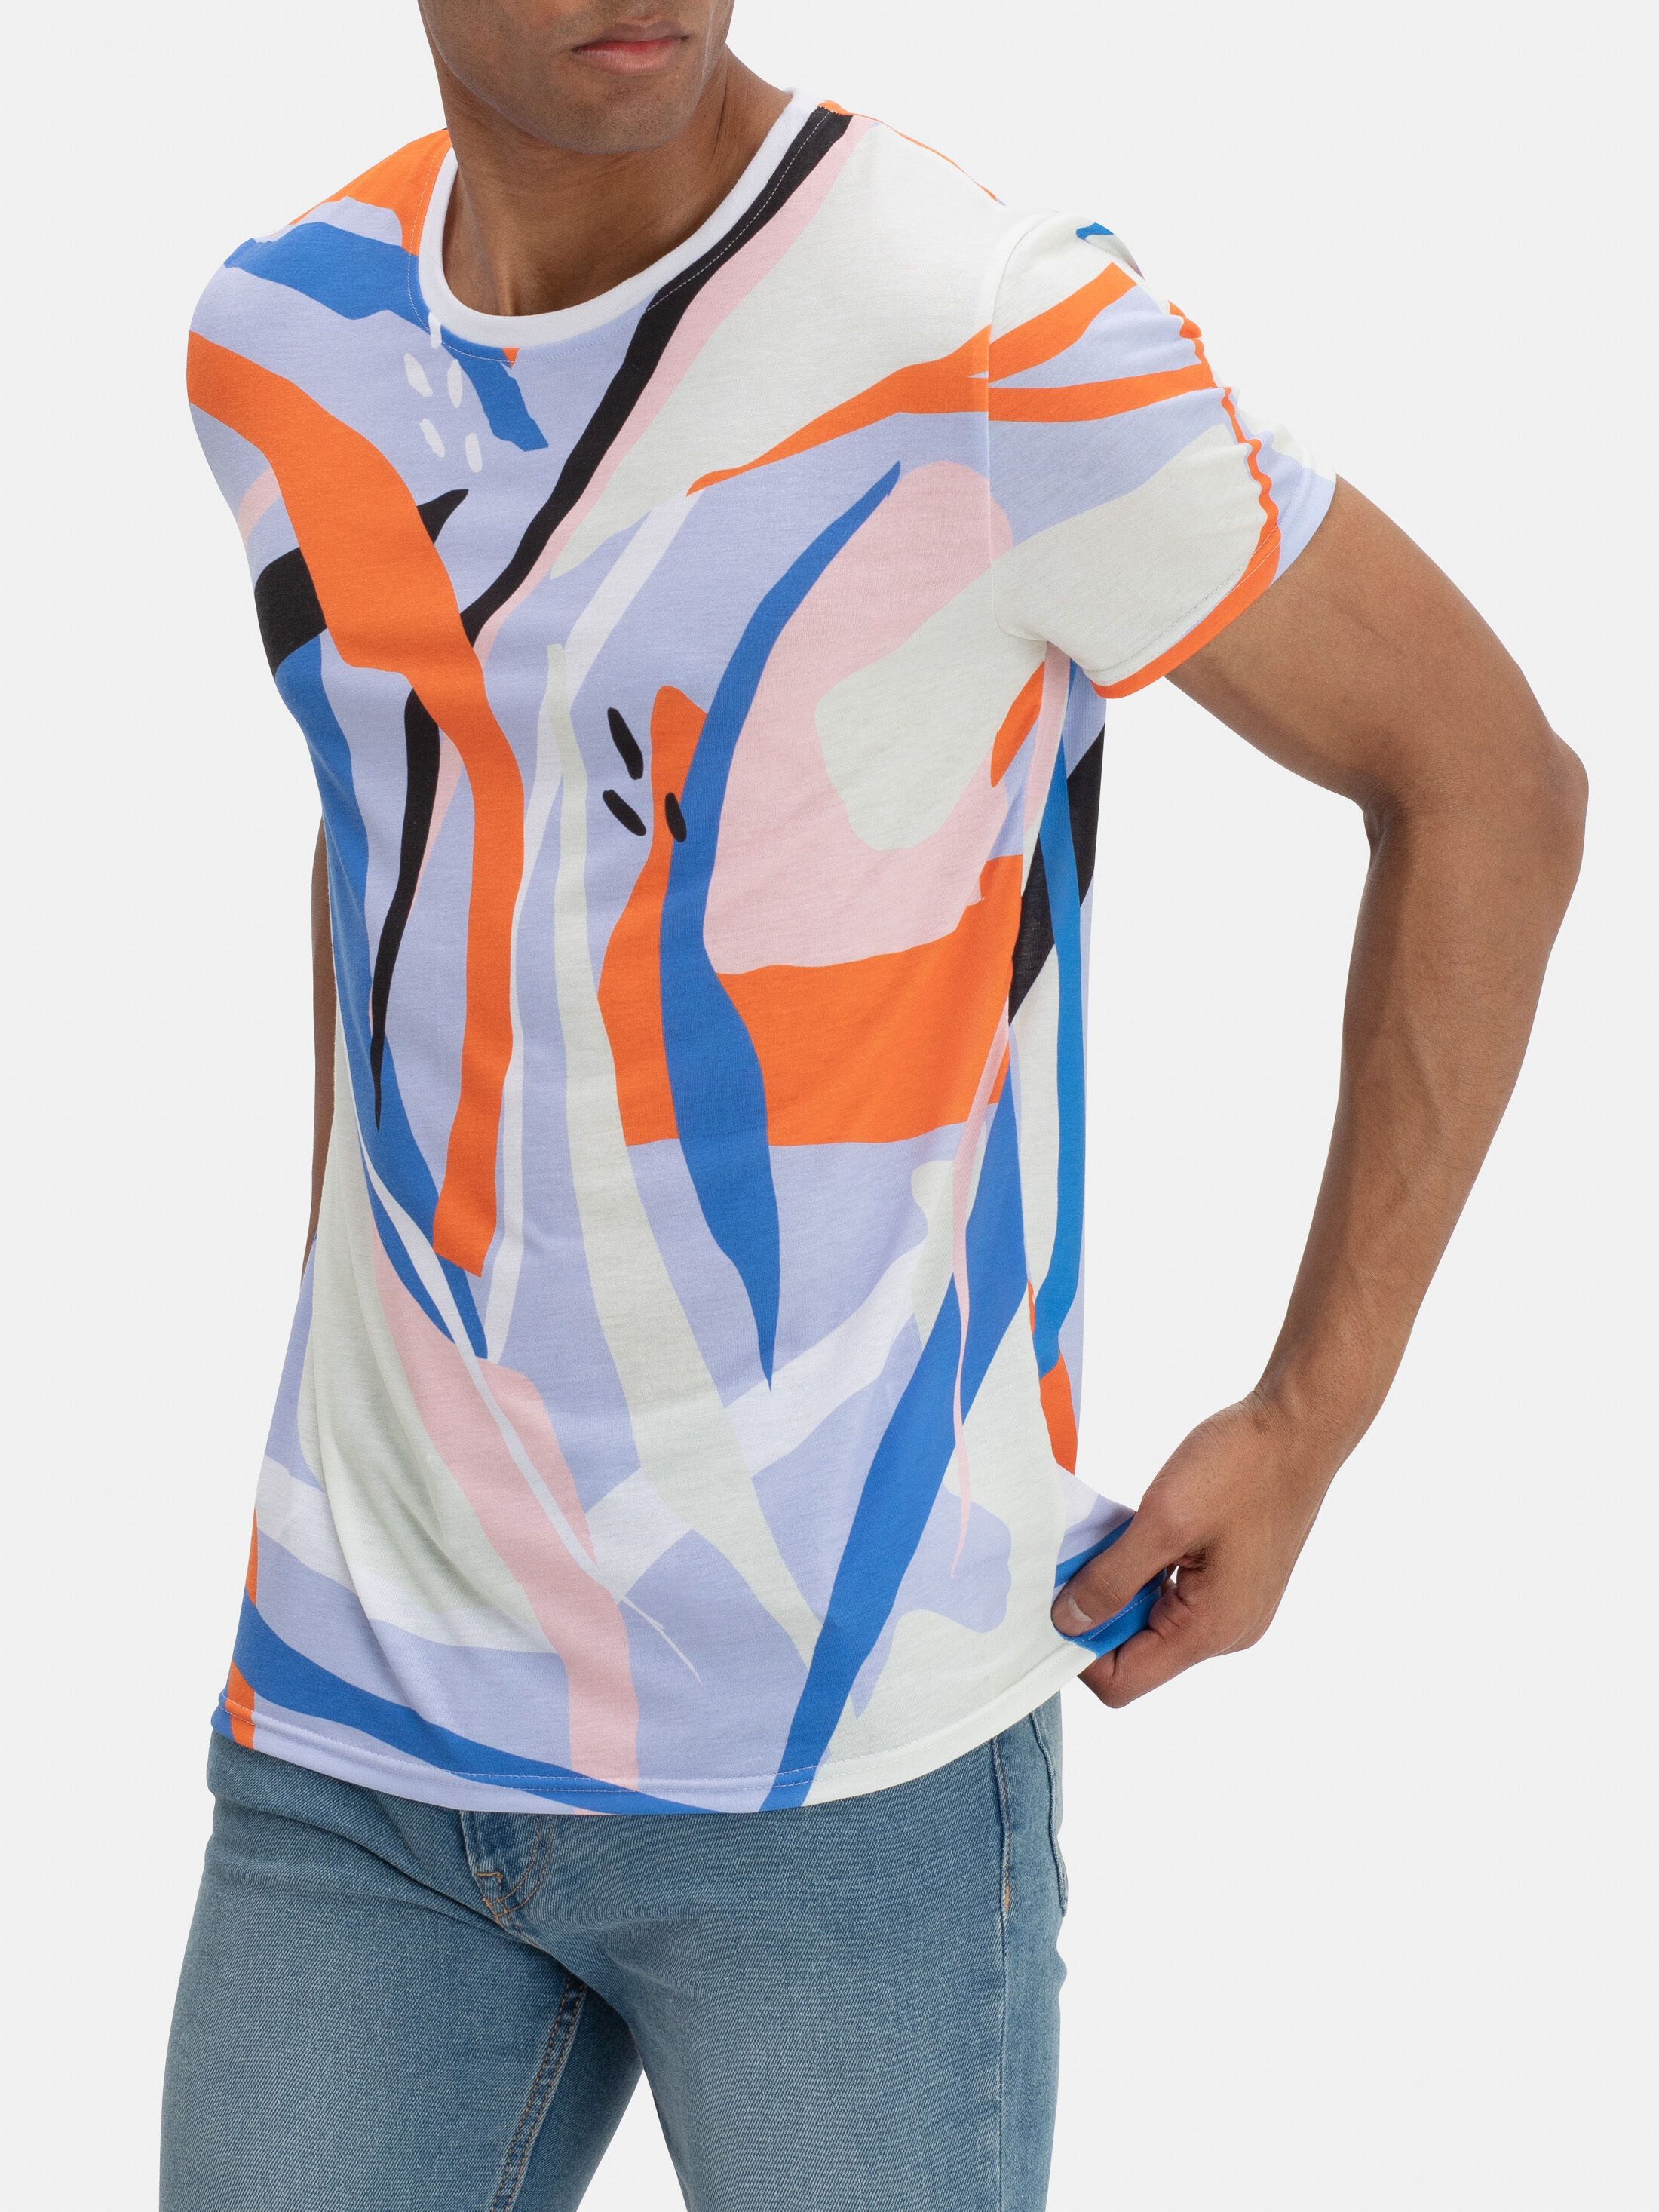 kulstof lyse kæmpe All-Over Custom T-Shirt Printing. Design All-Over Print T-Shirt